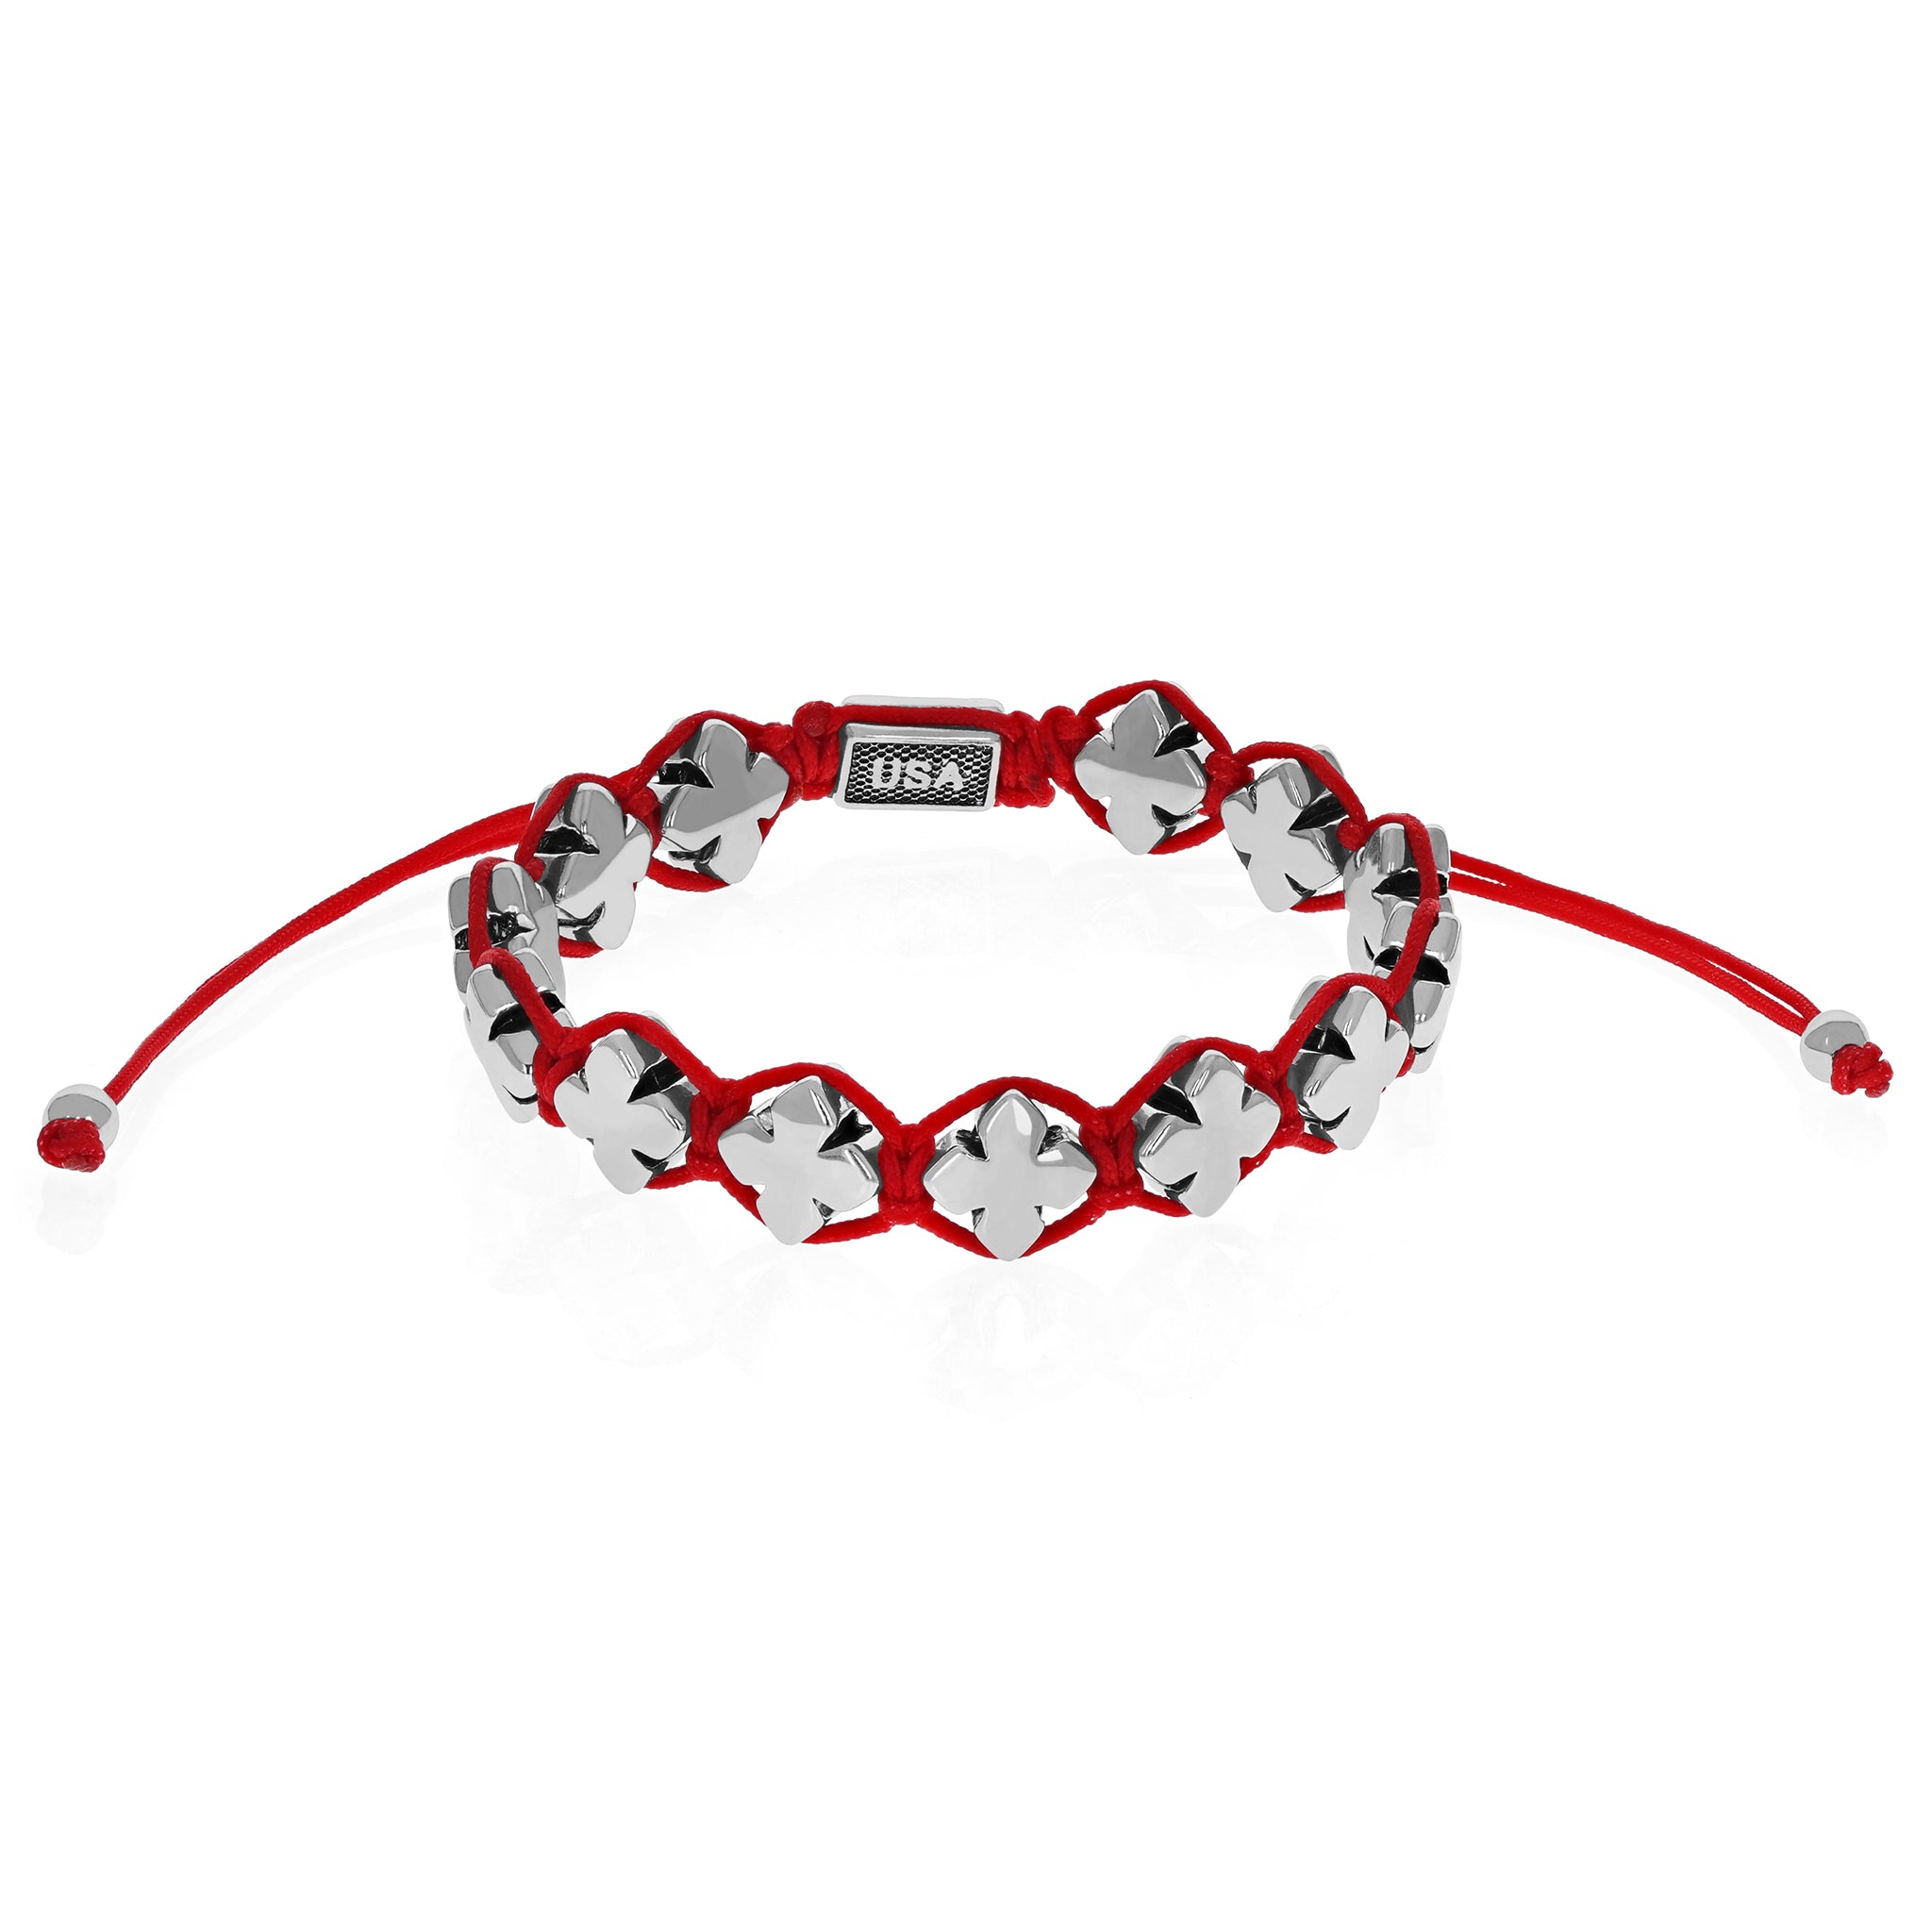 RED Macrame Bracelet w/ HIGH POLISH Alloy MB Crosses